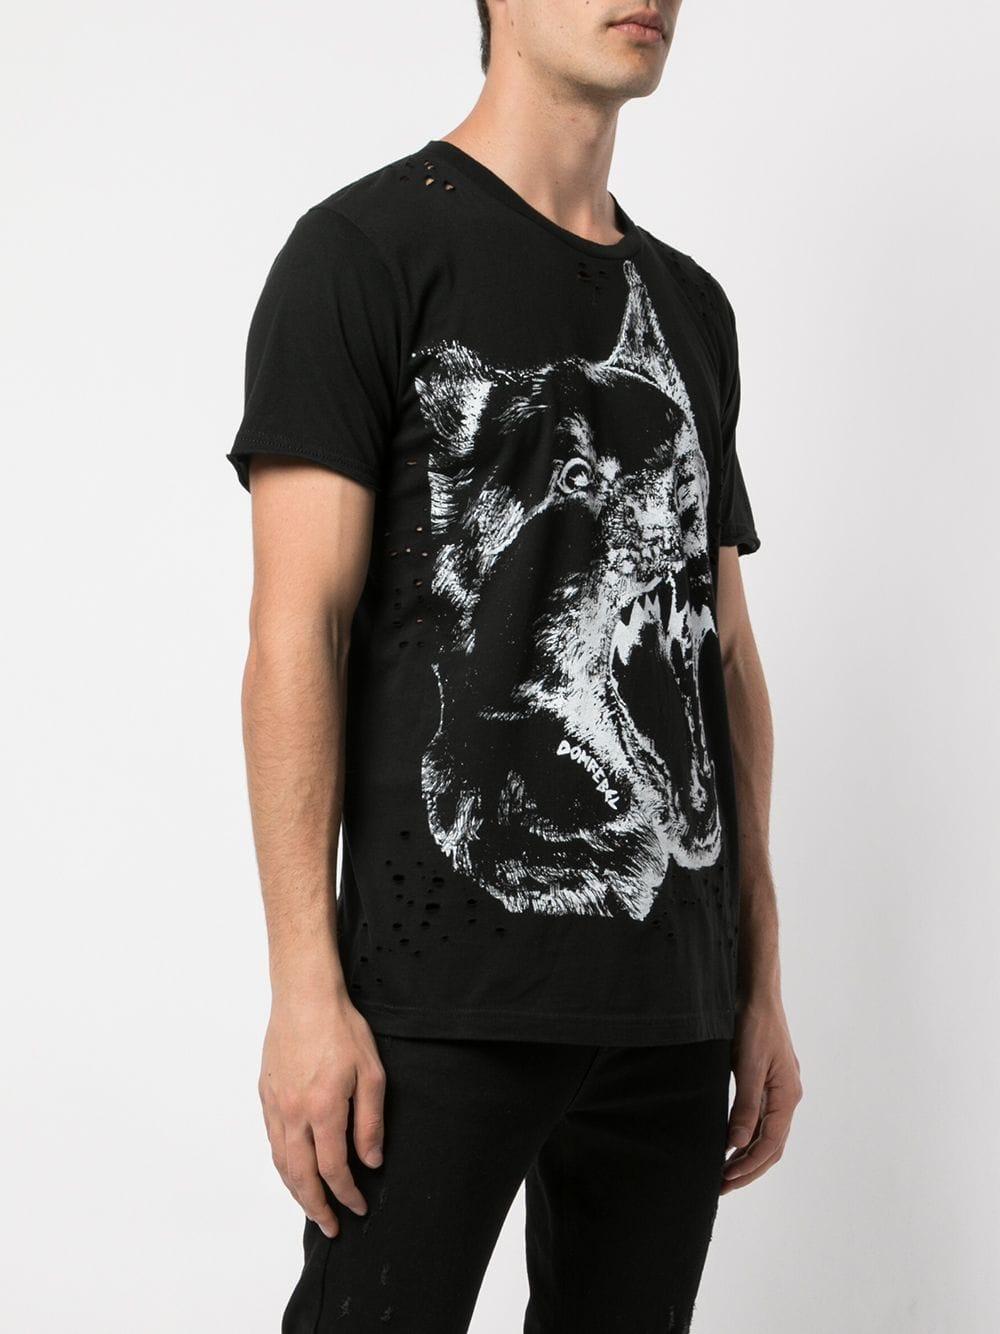 DOMREBEL Cotton Dogg Print T-shirt in Black for Men - Lyst